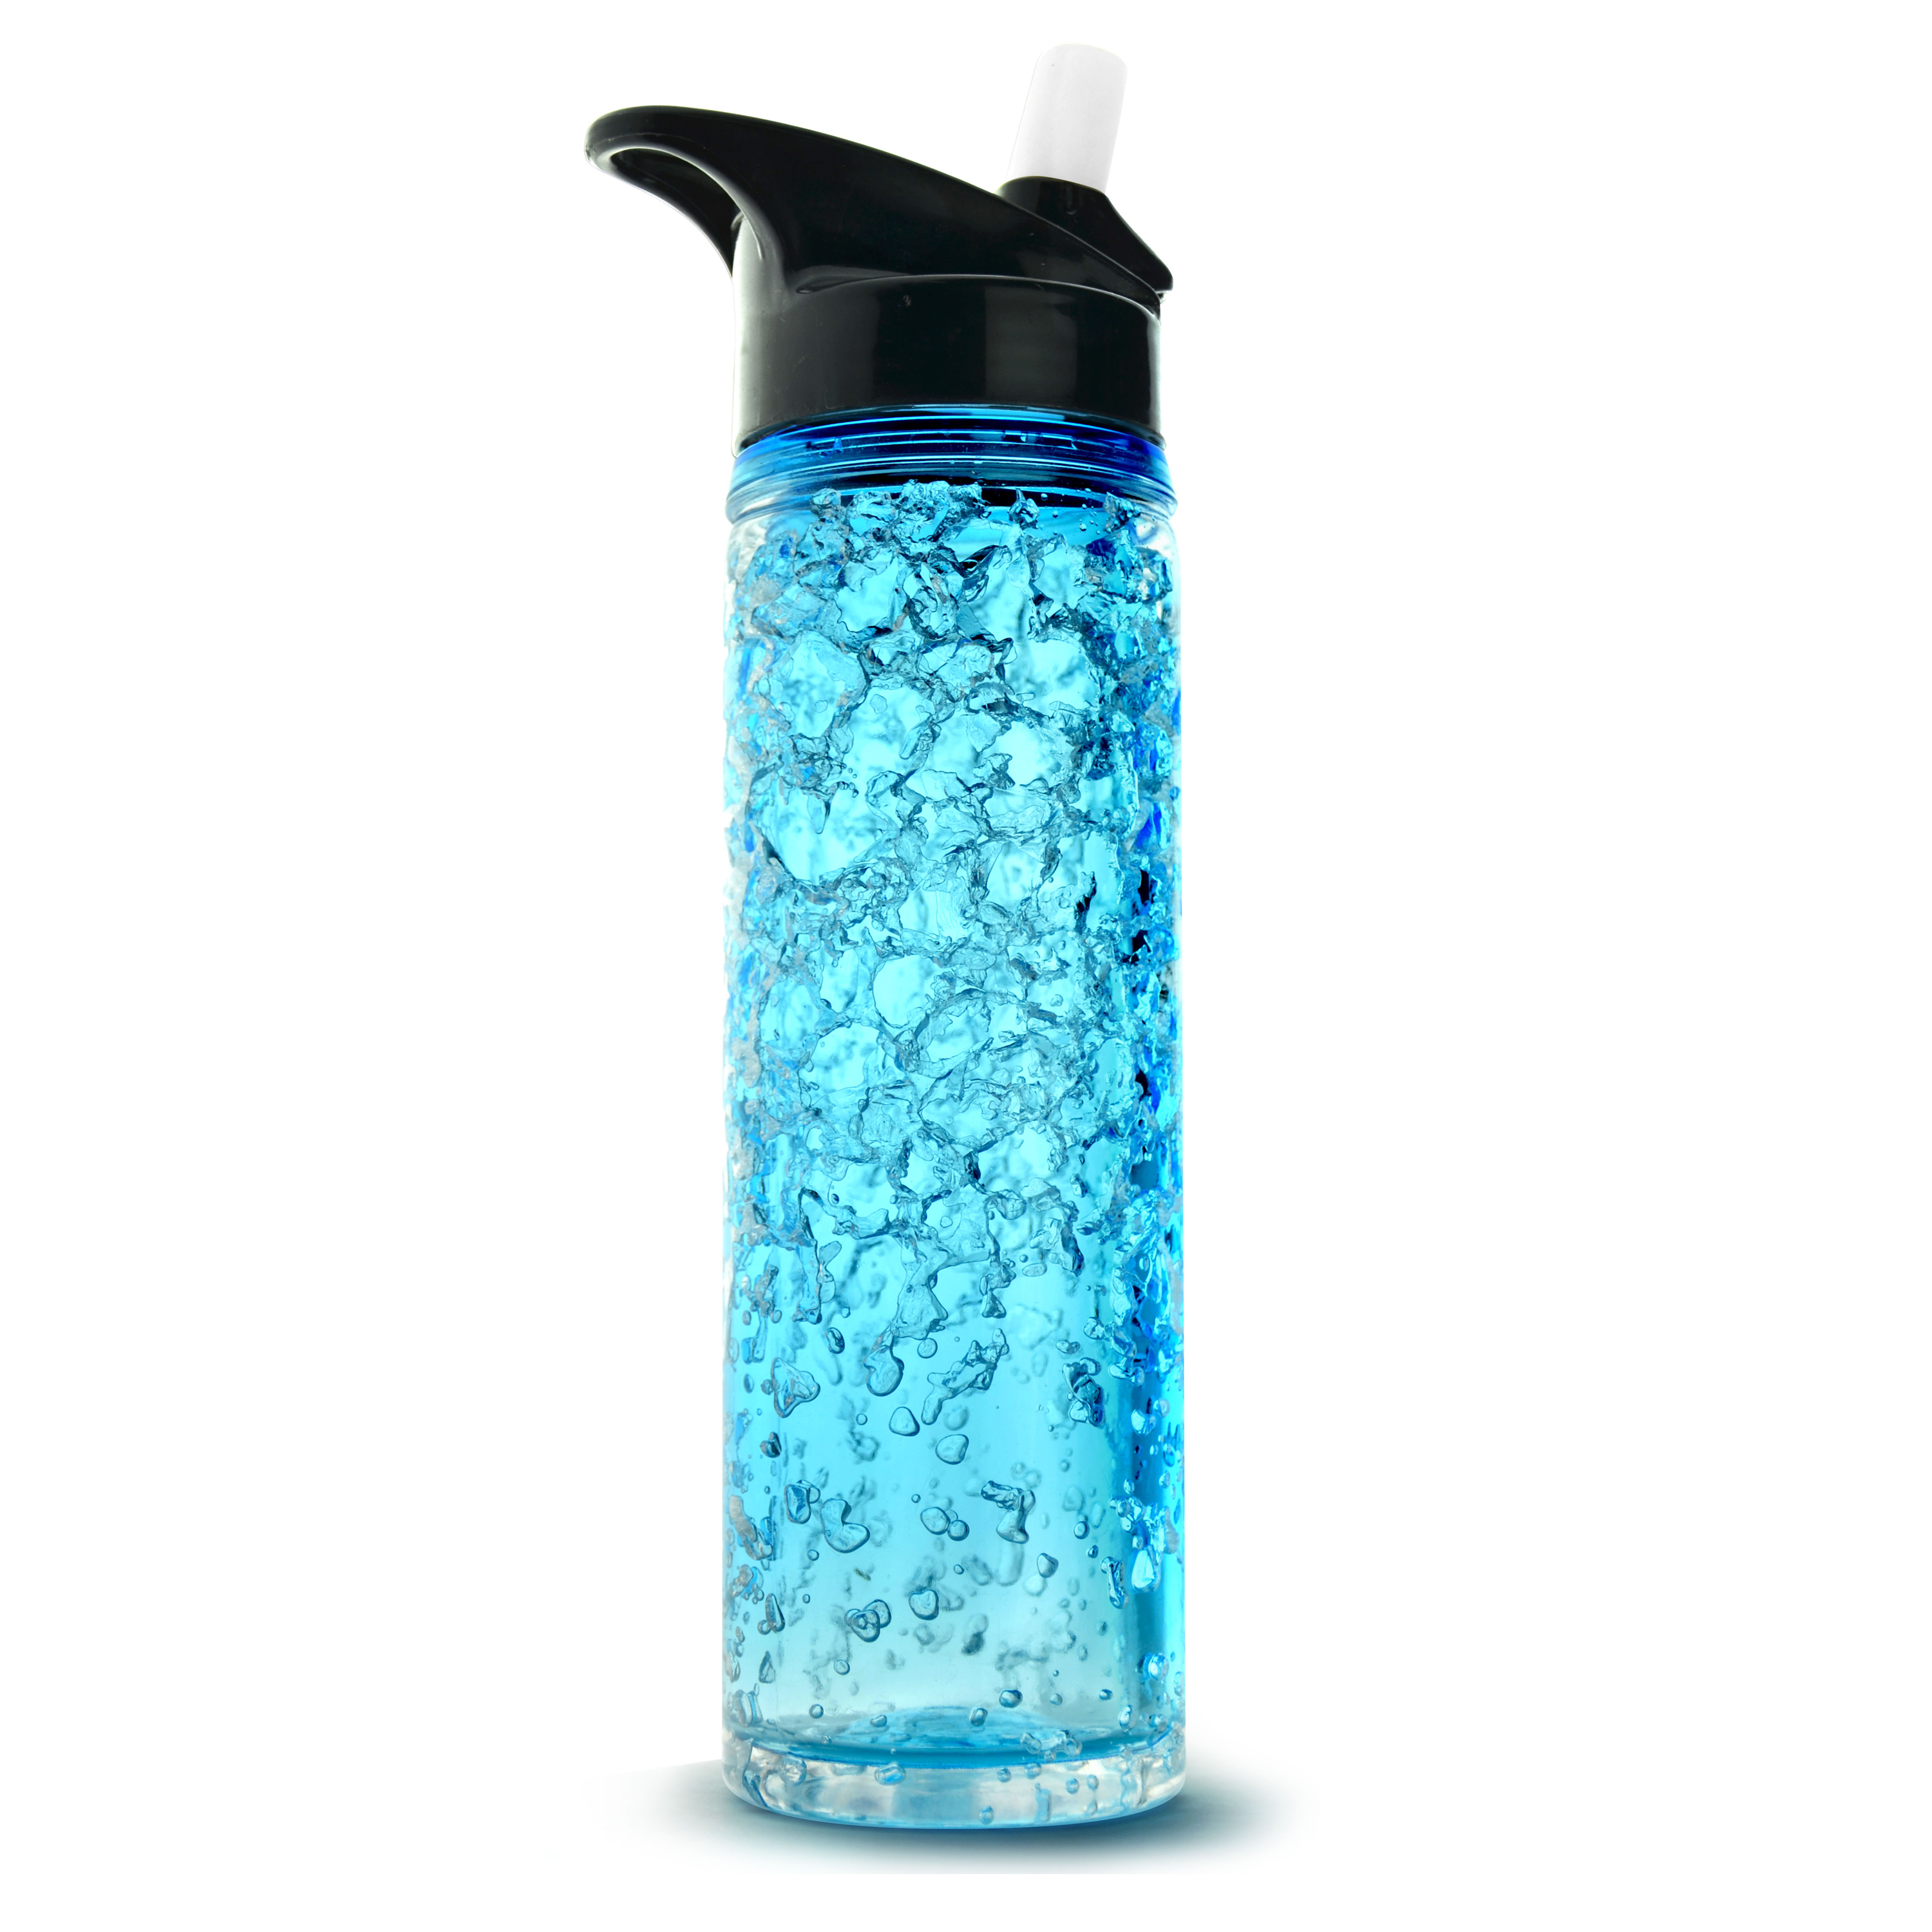 ASOBU Perma Frost Re-Freezable Bottle